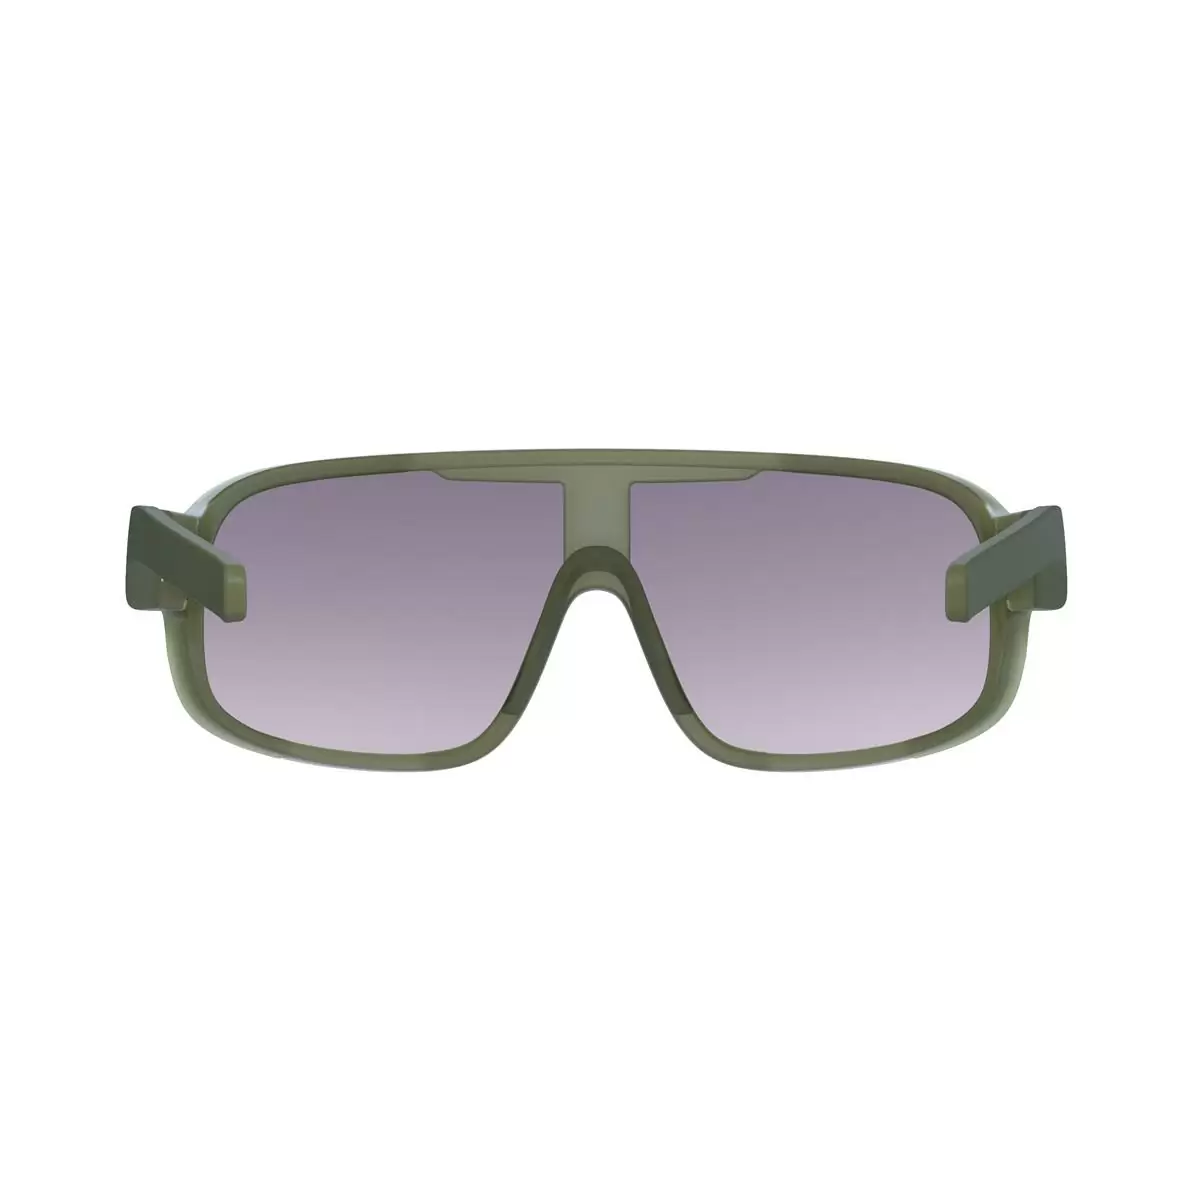 Aspire Sunglasses Epidote Green Translucent Lens Violet/Silver Mirror #3